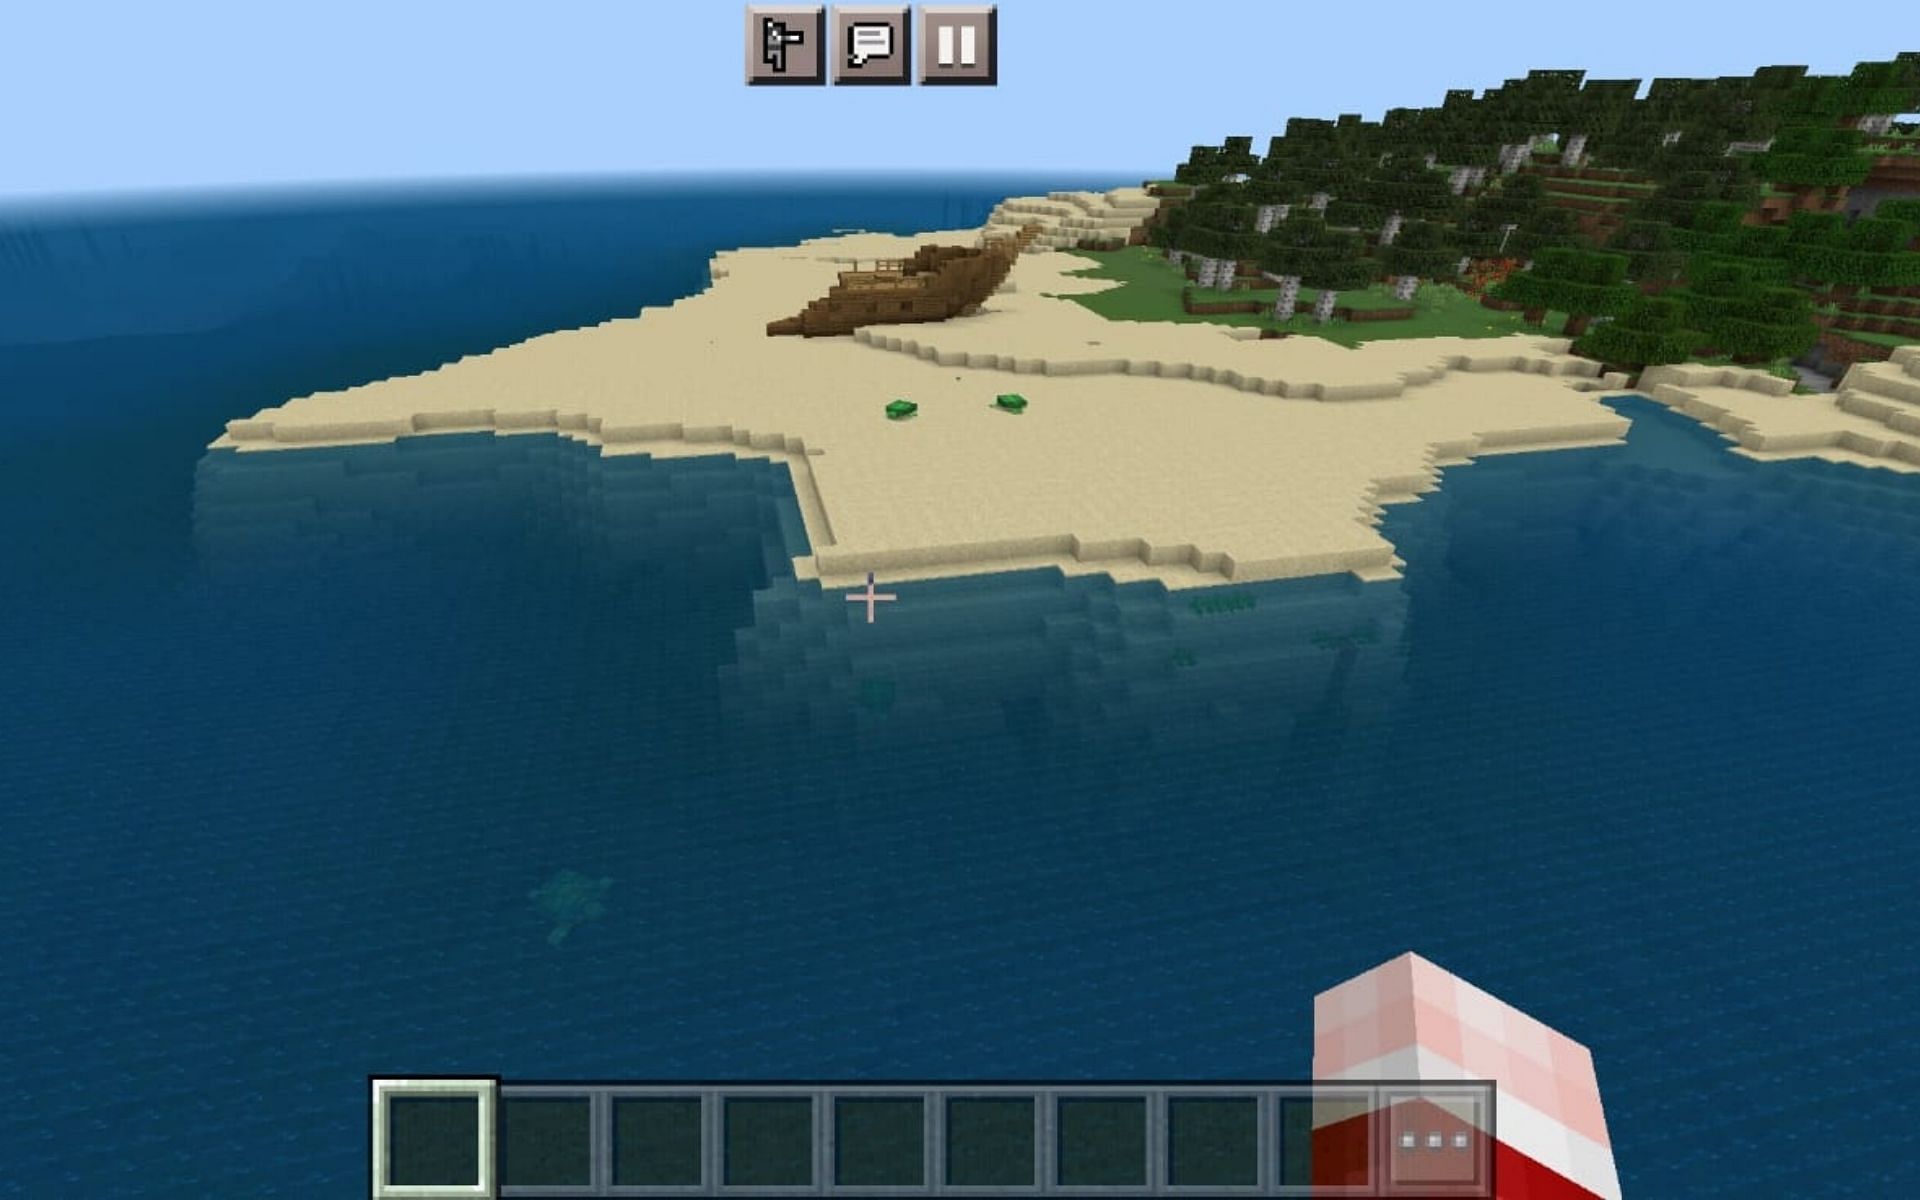 Crashed shipwreck on the beach (Image via Minecraft)